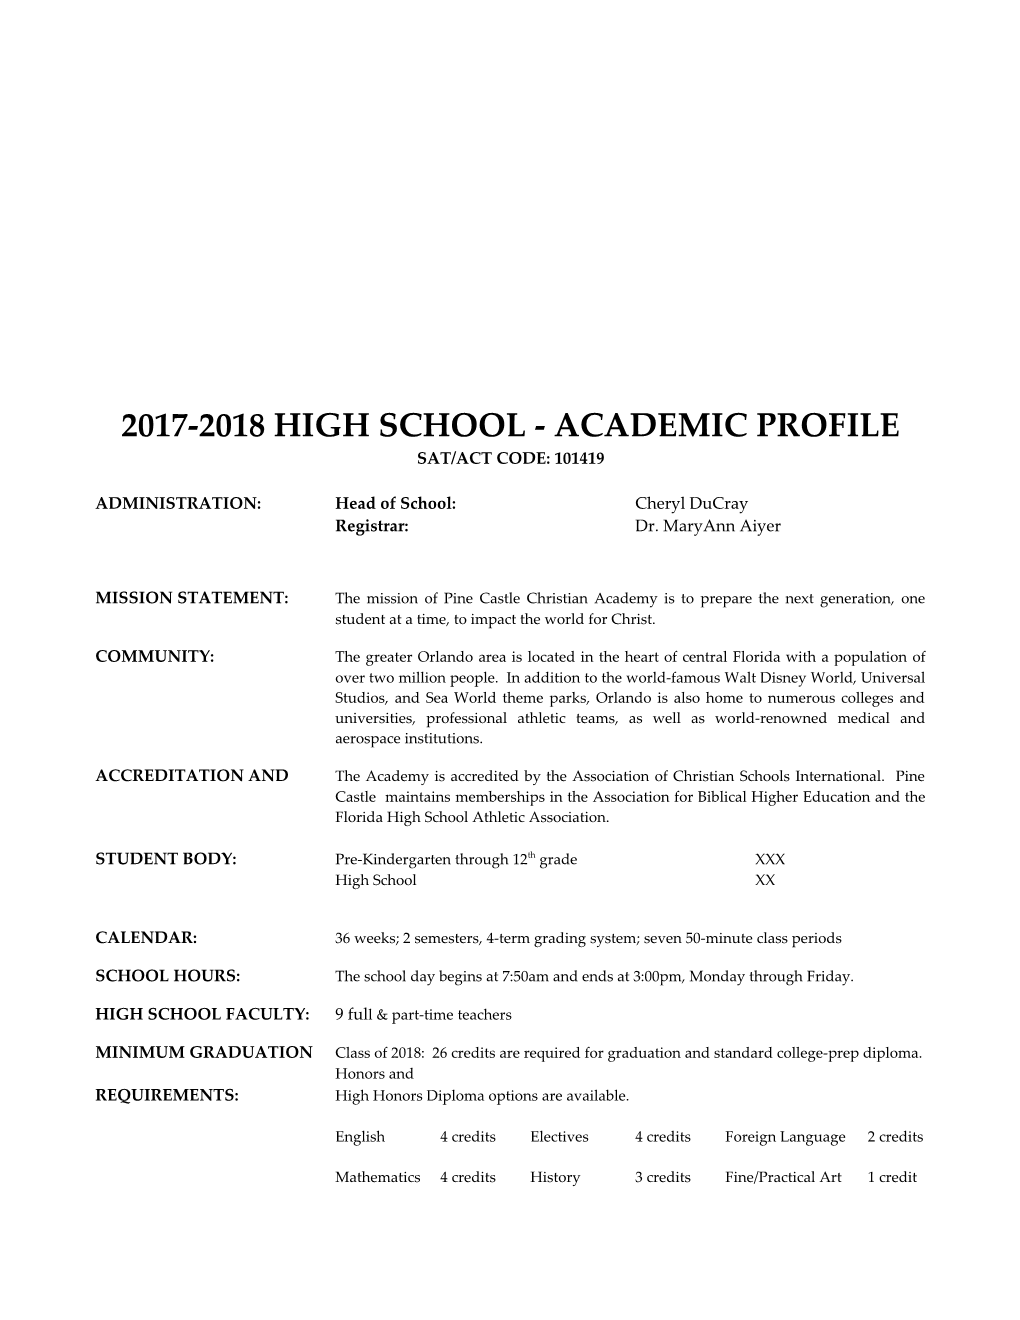 2017-2018 High School - Academic Profile